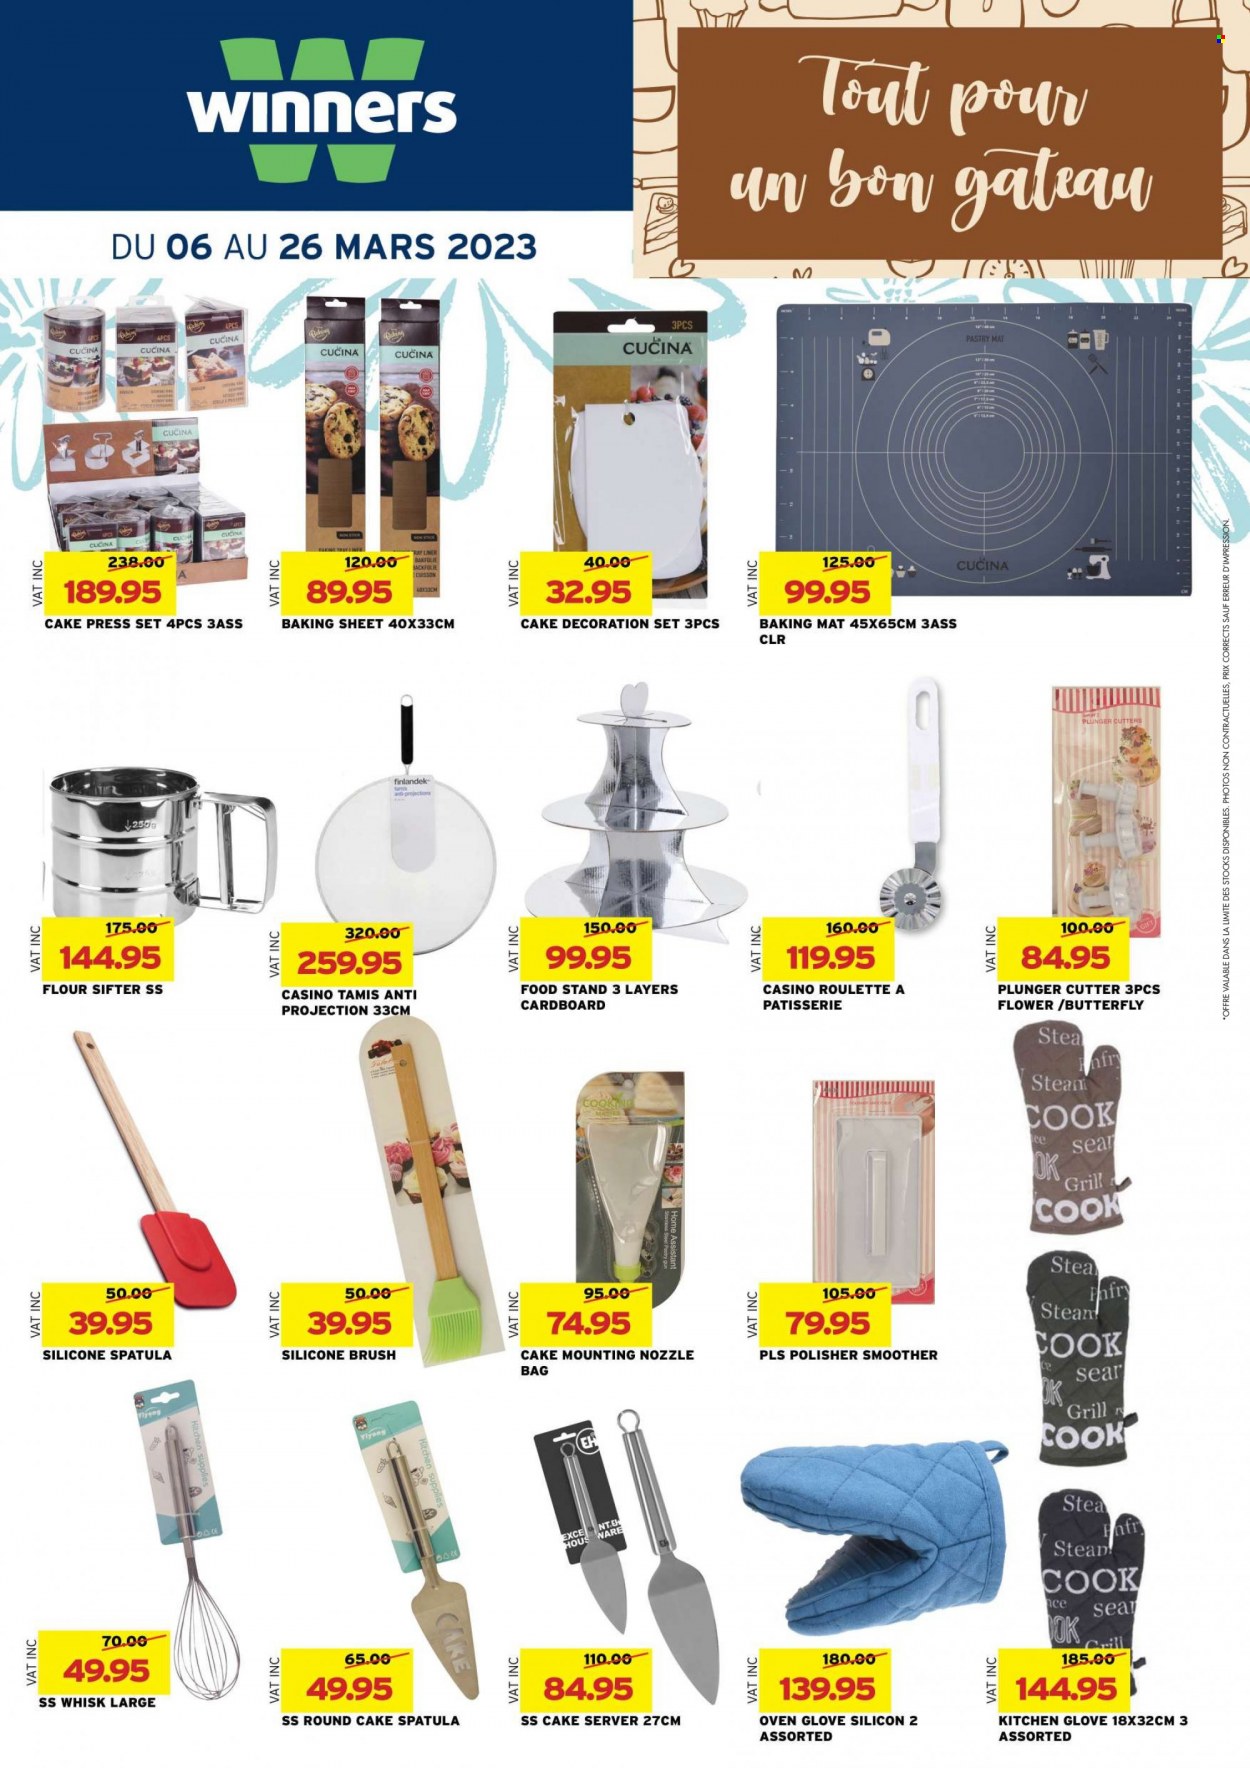 <magasin> - <du DD/MM/YYYY au DD/MM/YYYY> - Produits soldés - ,<products from flyers>. Page 25. 